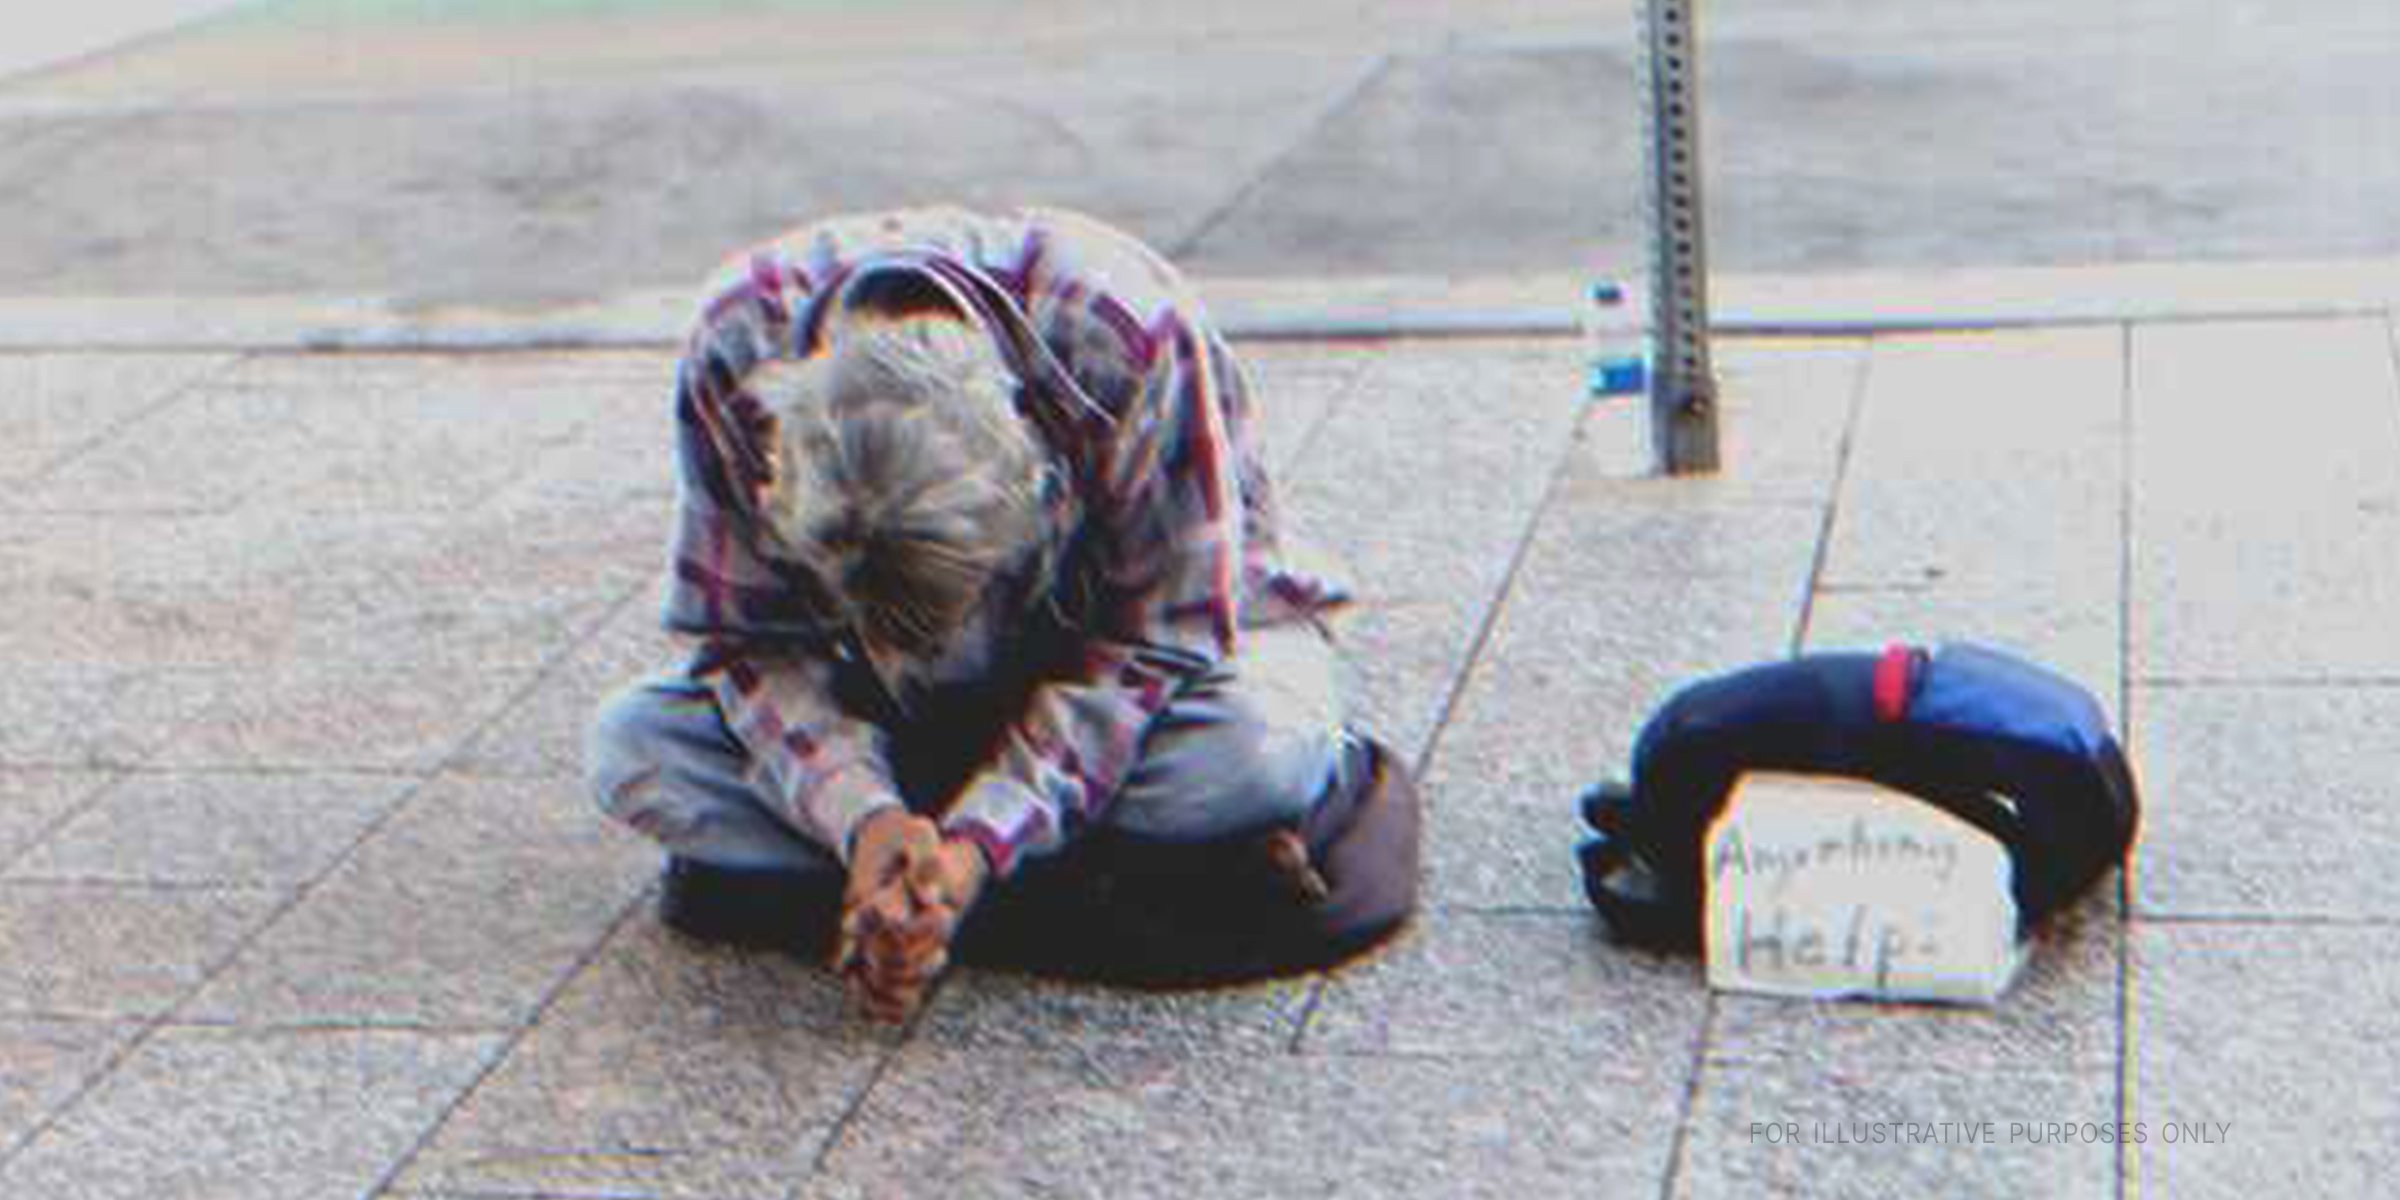 Homeless older man on the street | Source: Shutterstock